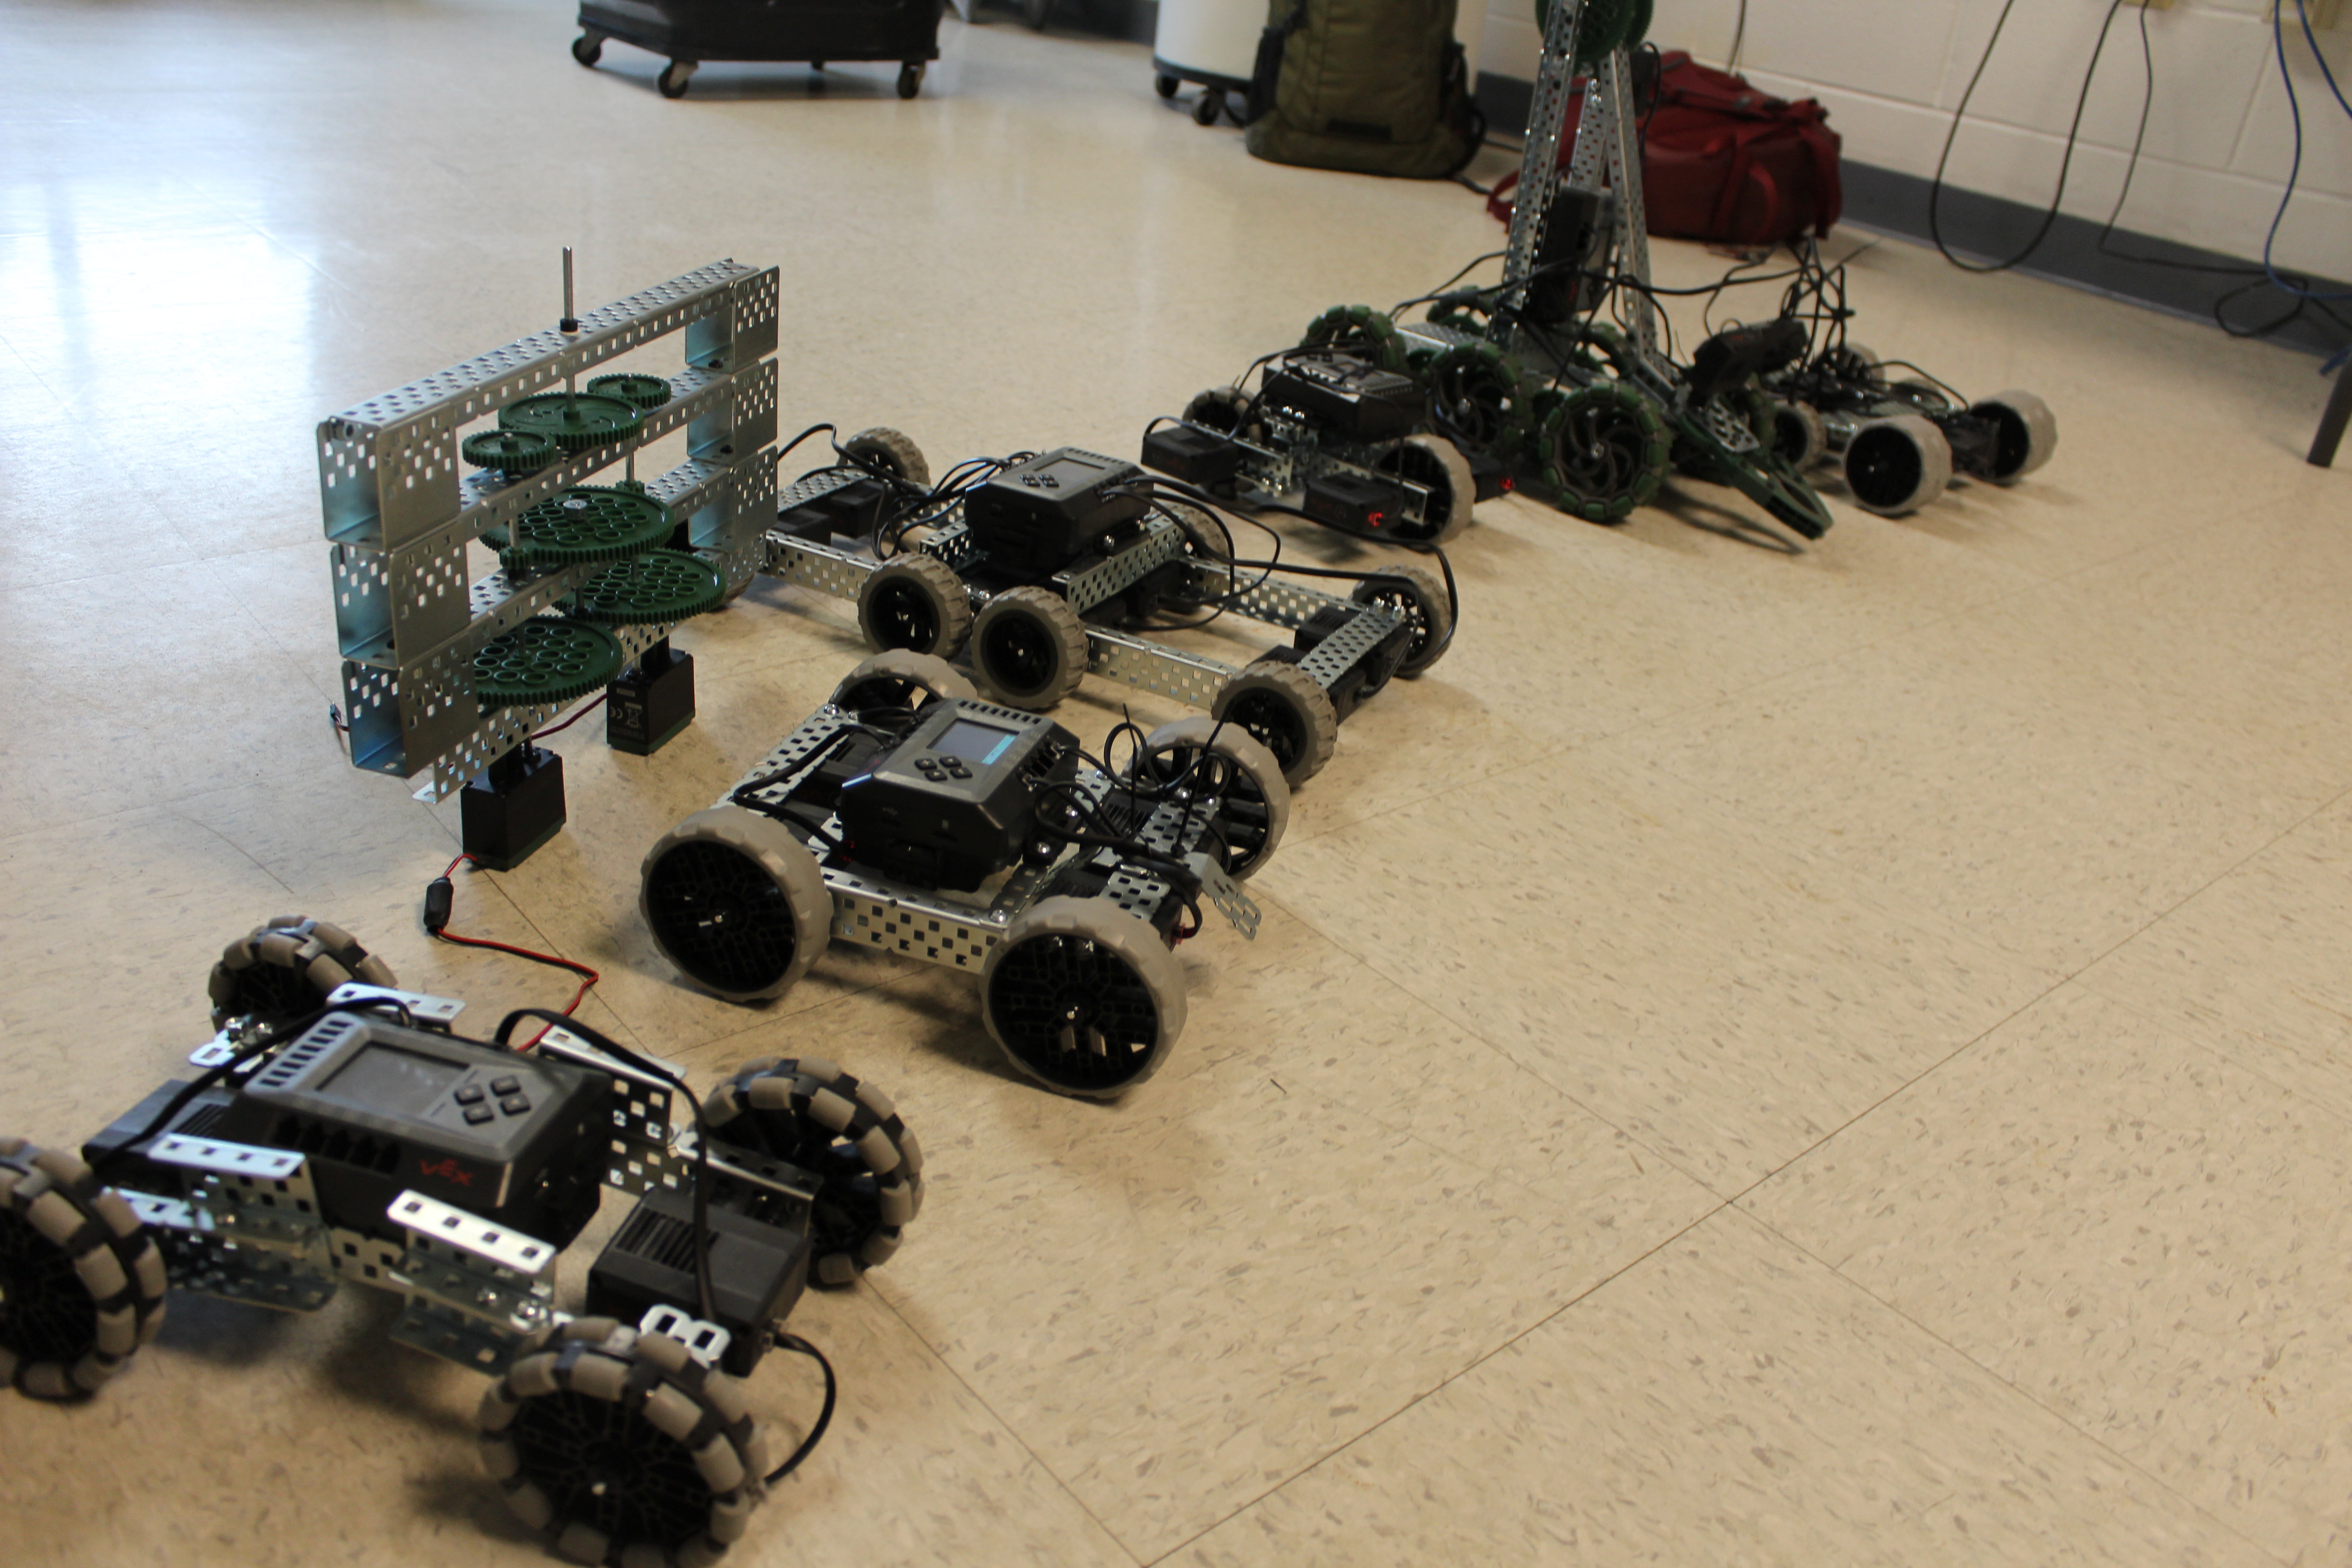 Collection of robots our robotics club has built